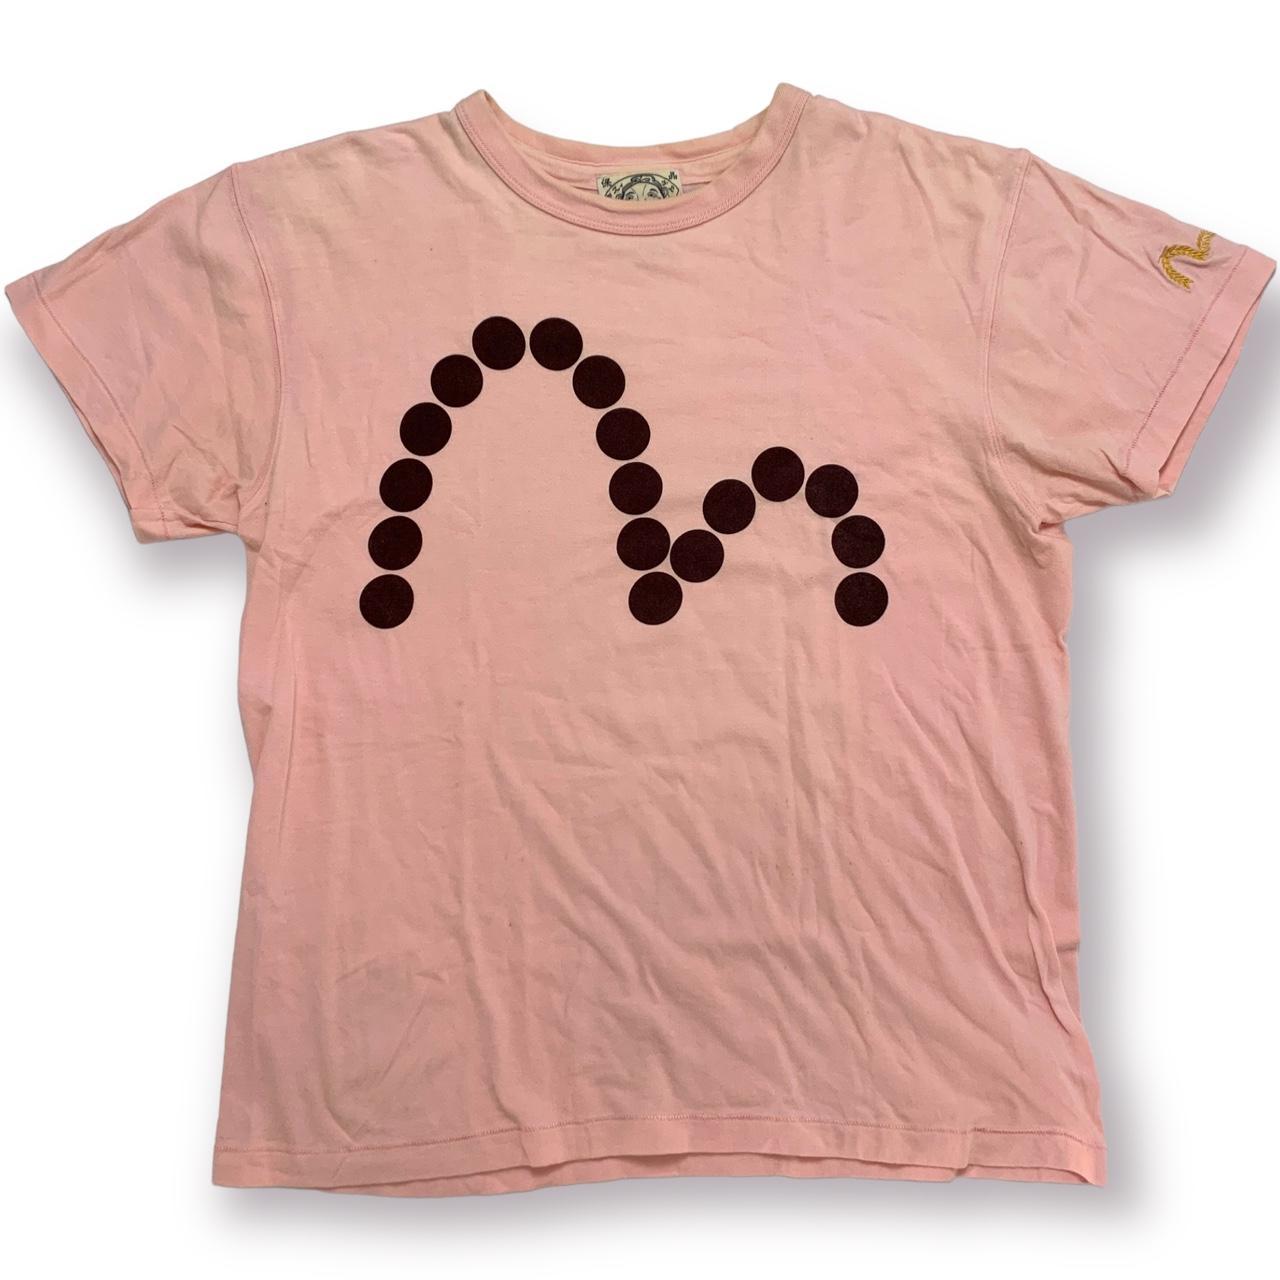 Evisu T-Shirt (M)